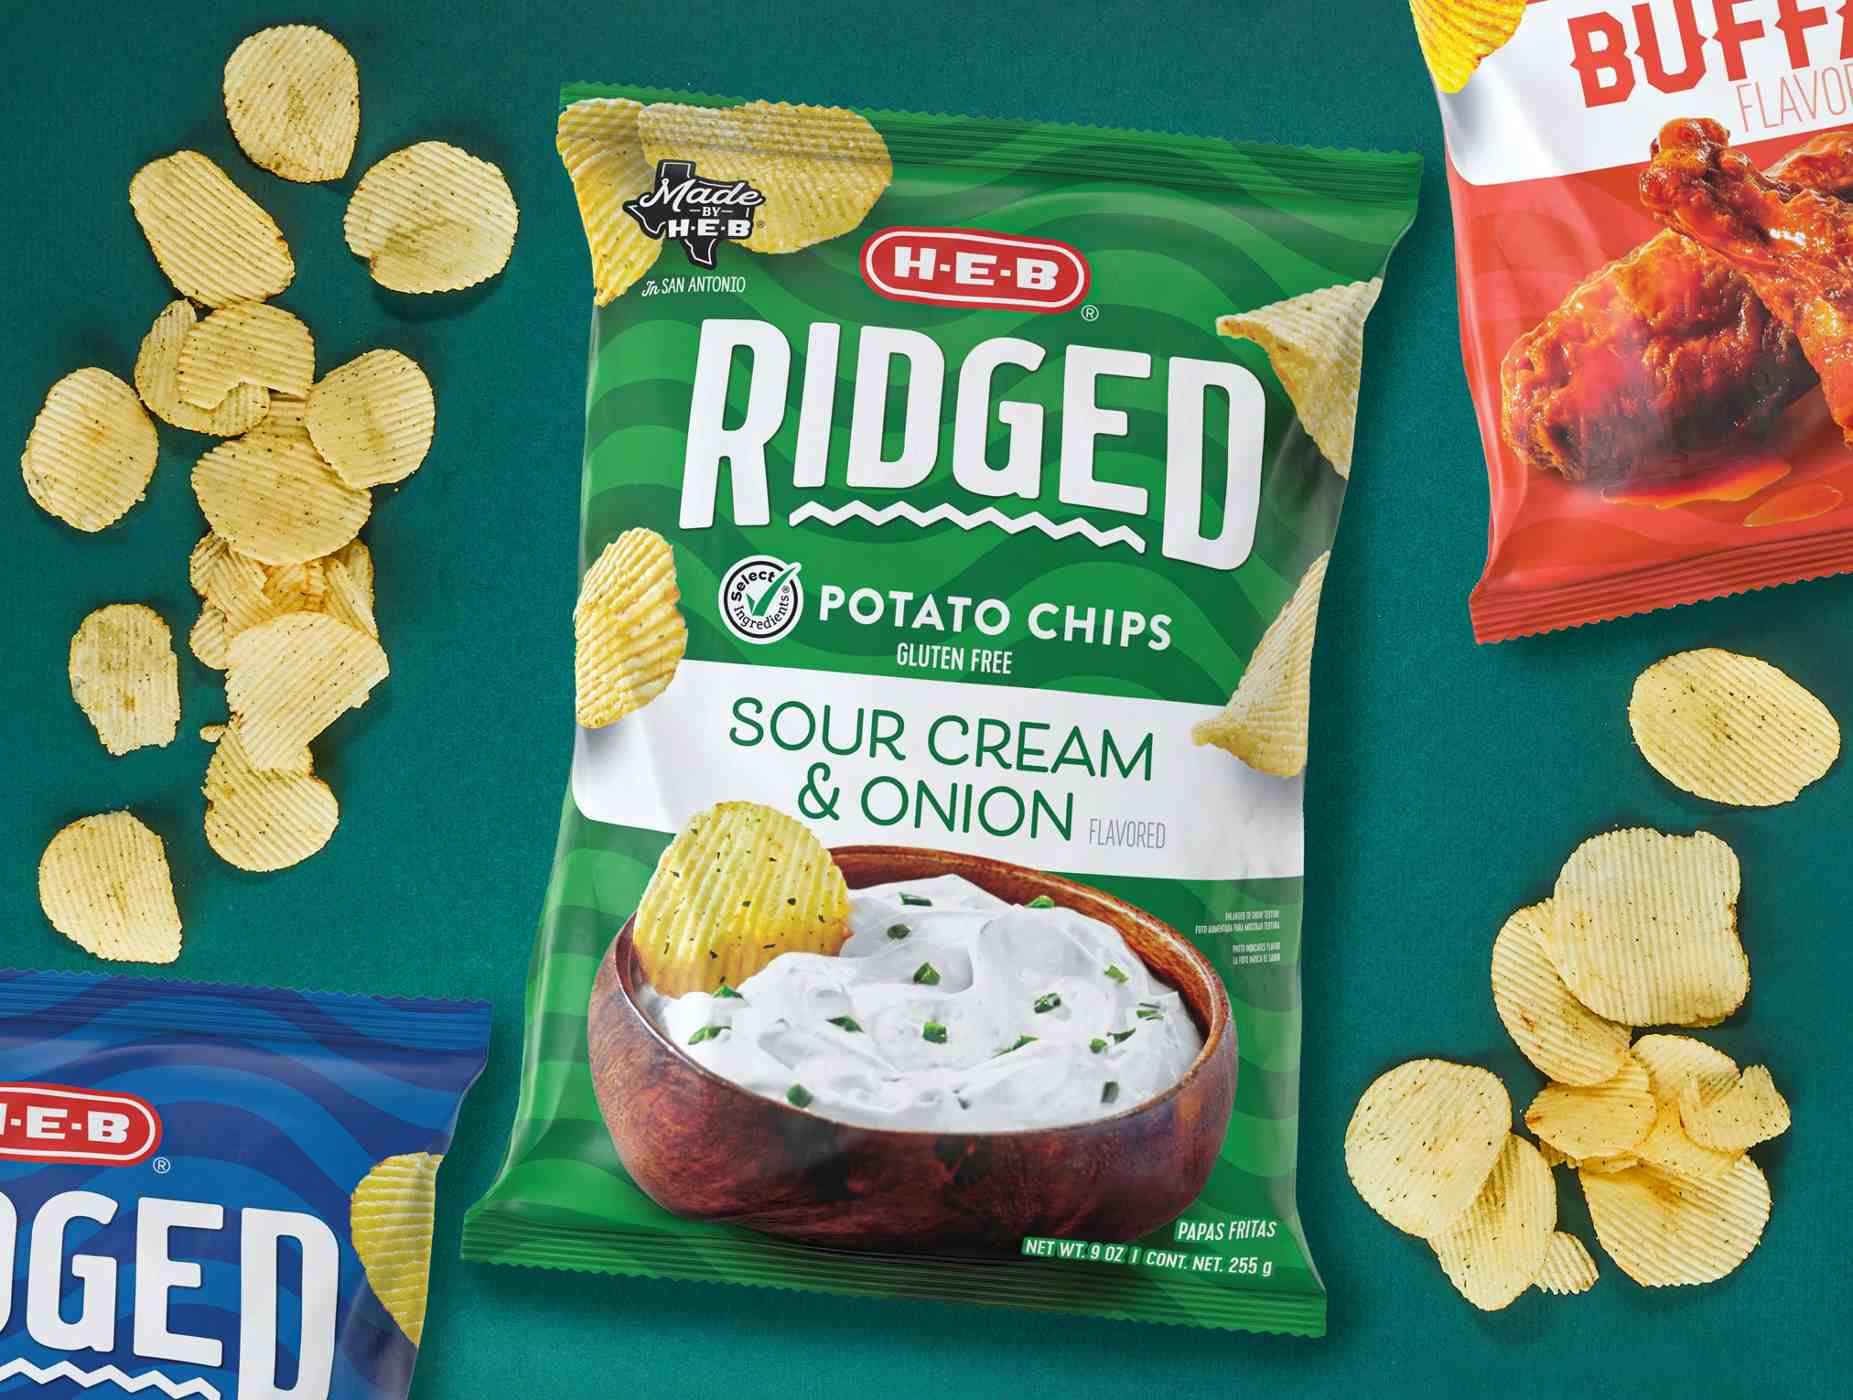 H-E-B Ridged Potato Chips – Sour Cream & Onion; image 2 of 4